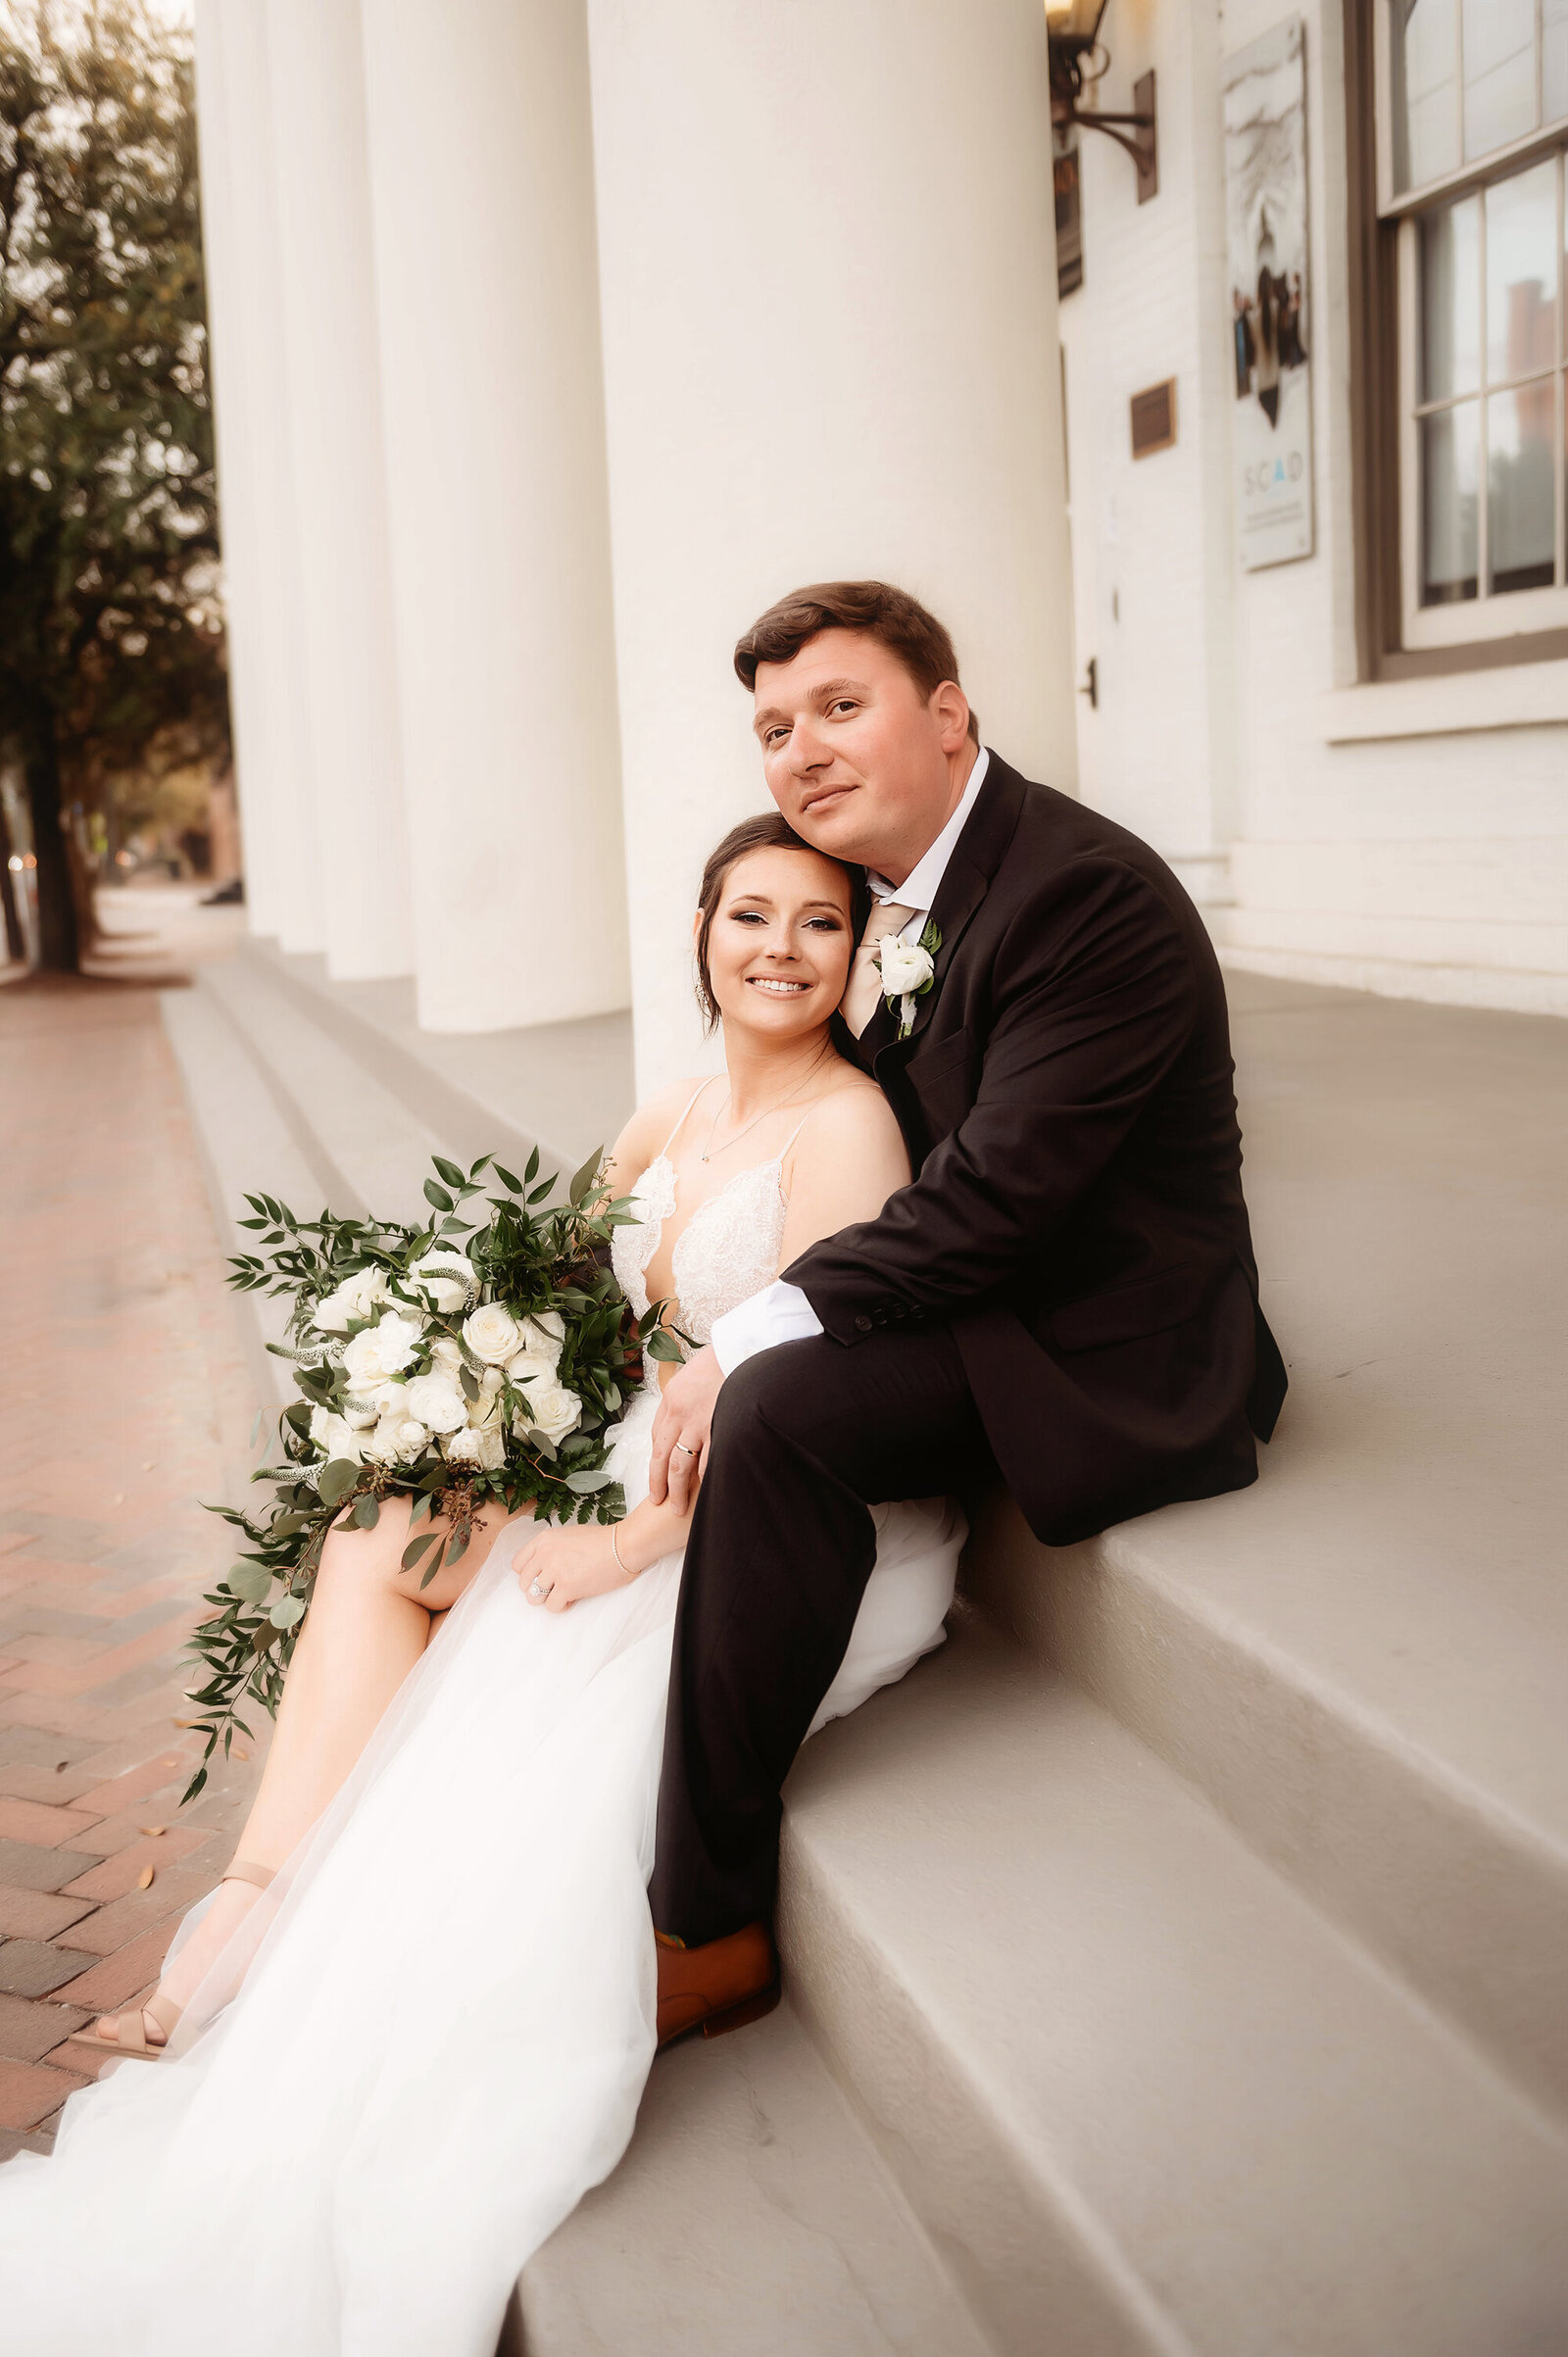 Newlyweds pose for Wedding Photos in Savannah, GA.